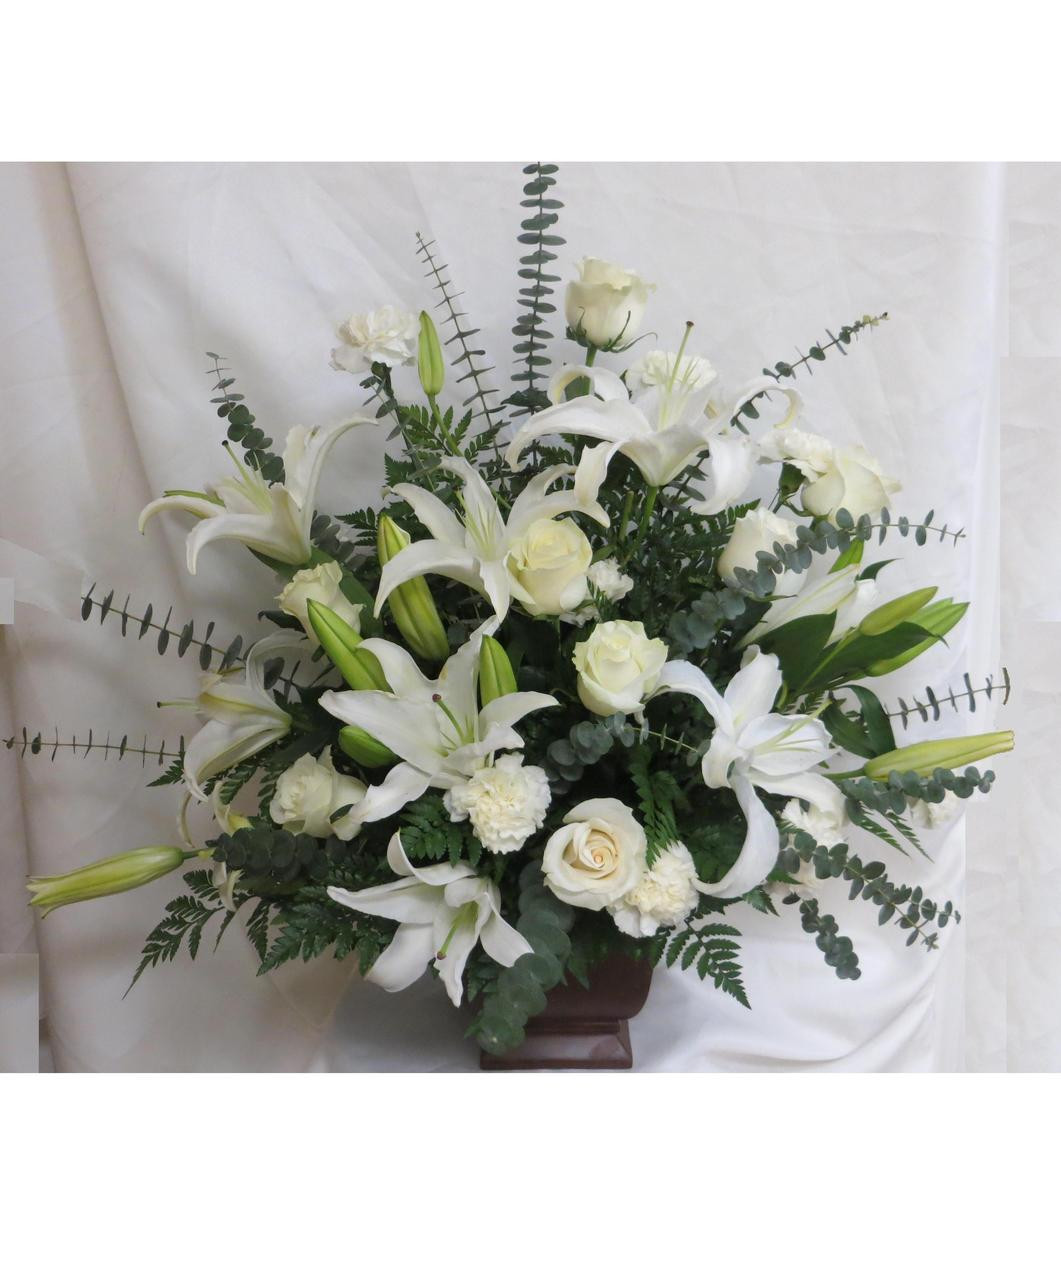 White Serenity Urn Funeral Flowers Arrangement